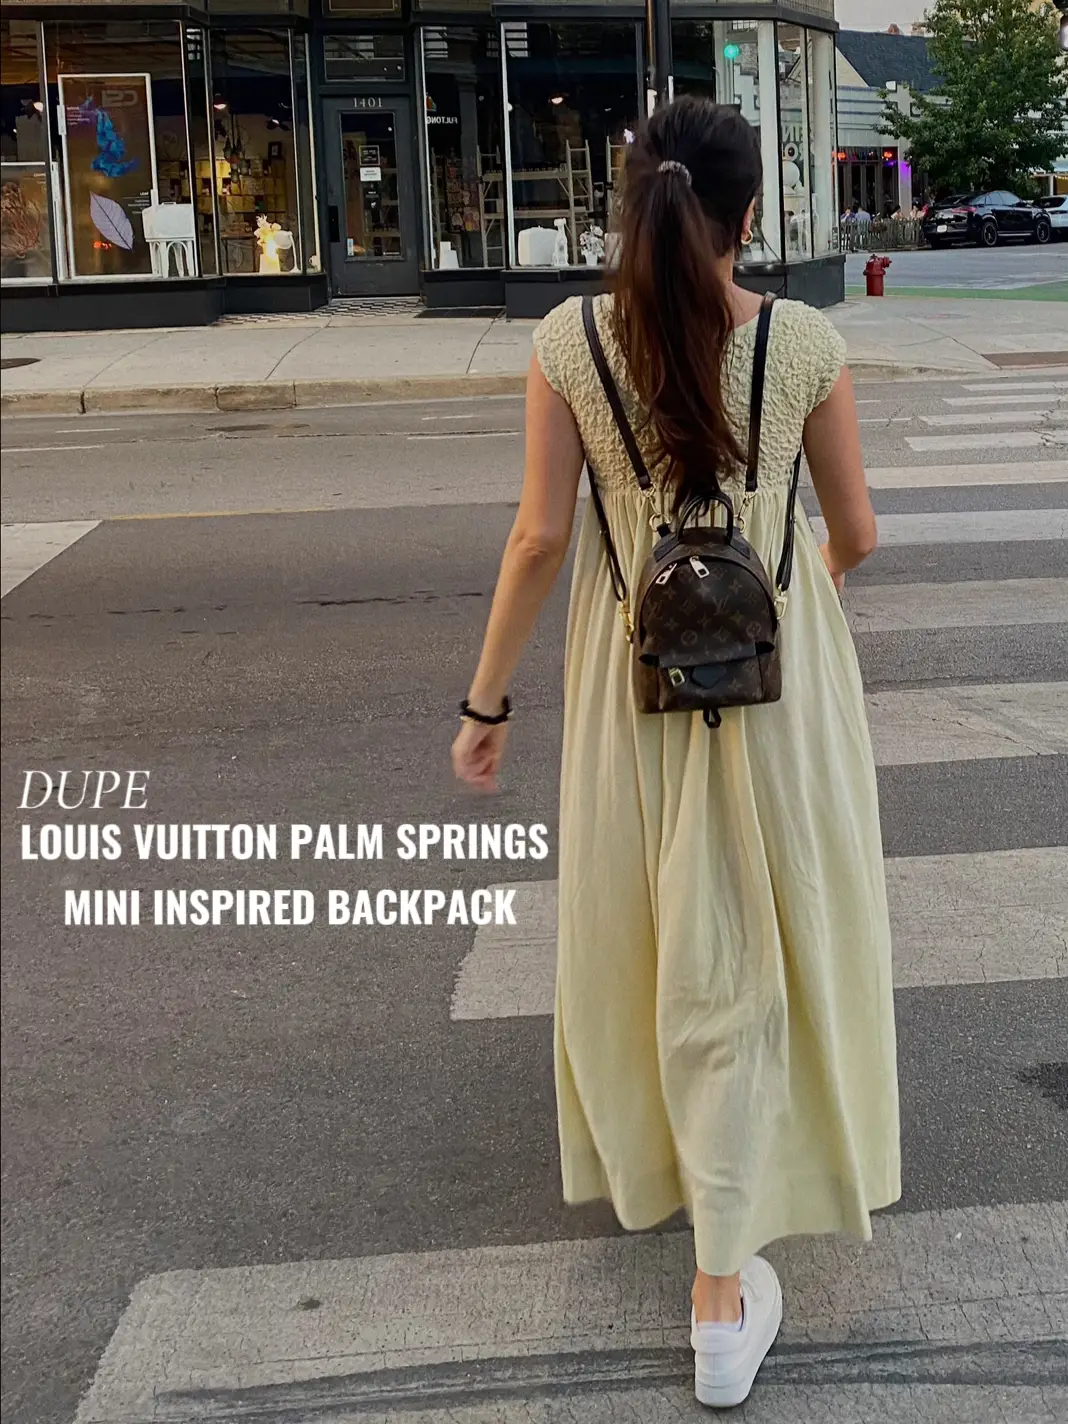 27 Outfit backpack ideas  louis vuitton palm springs mini, louis